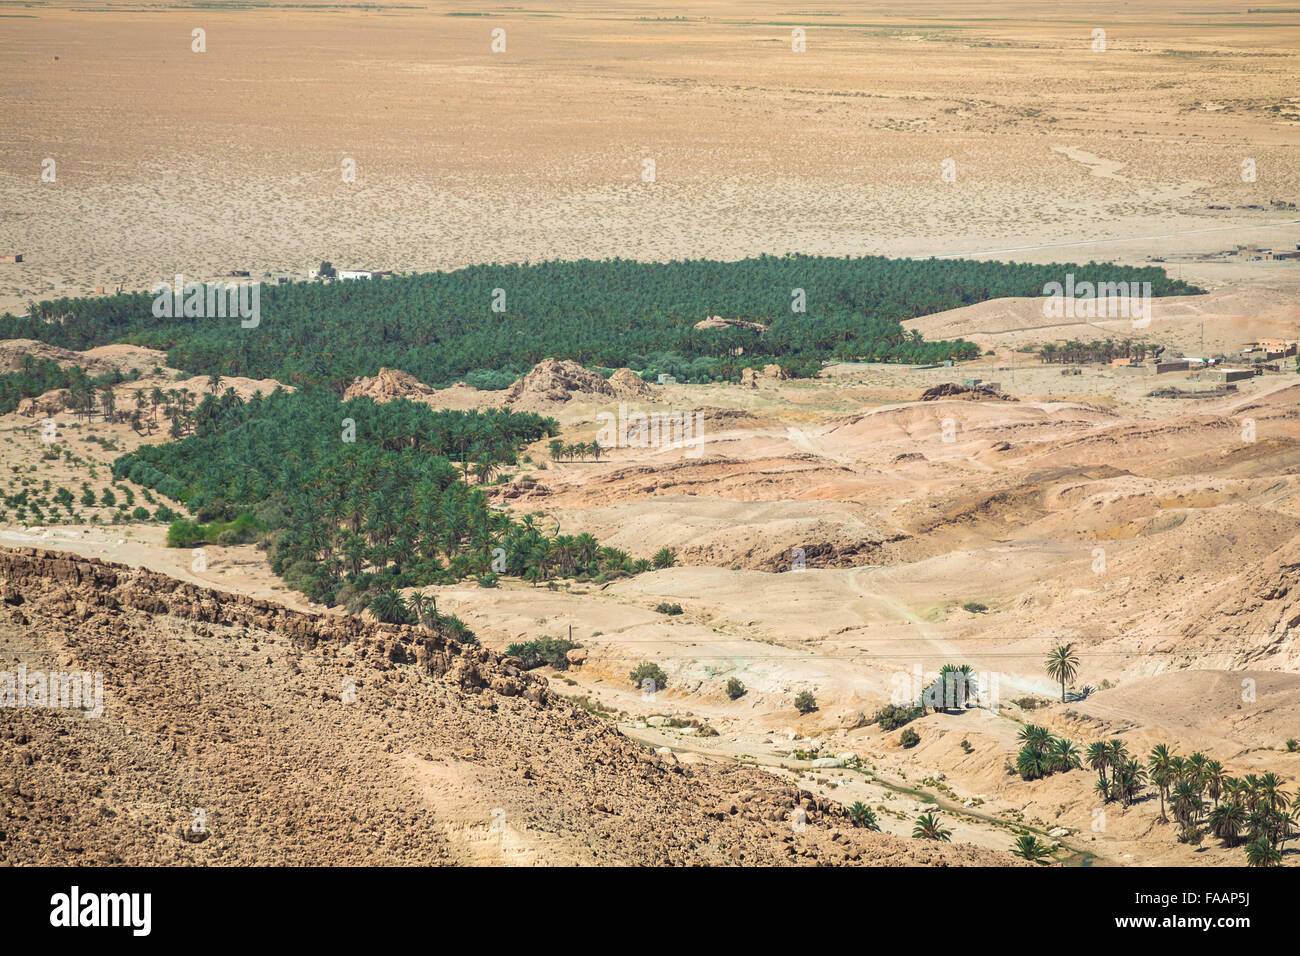 Mountain oasis Tamerza in Tunisia near the border with Algeria. Stock Photo